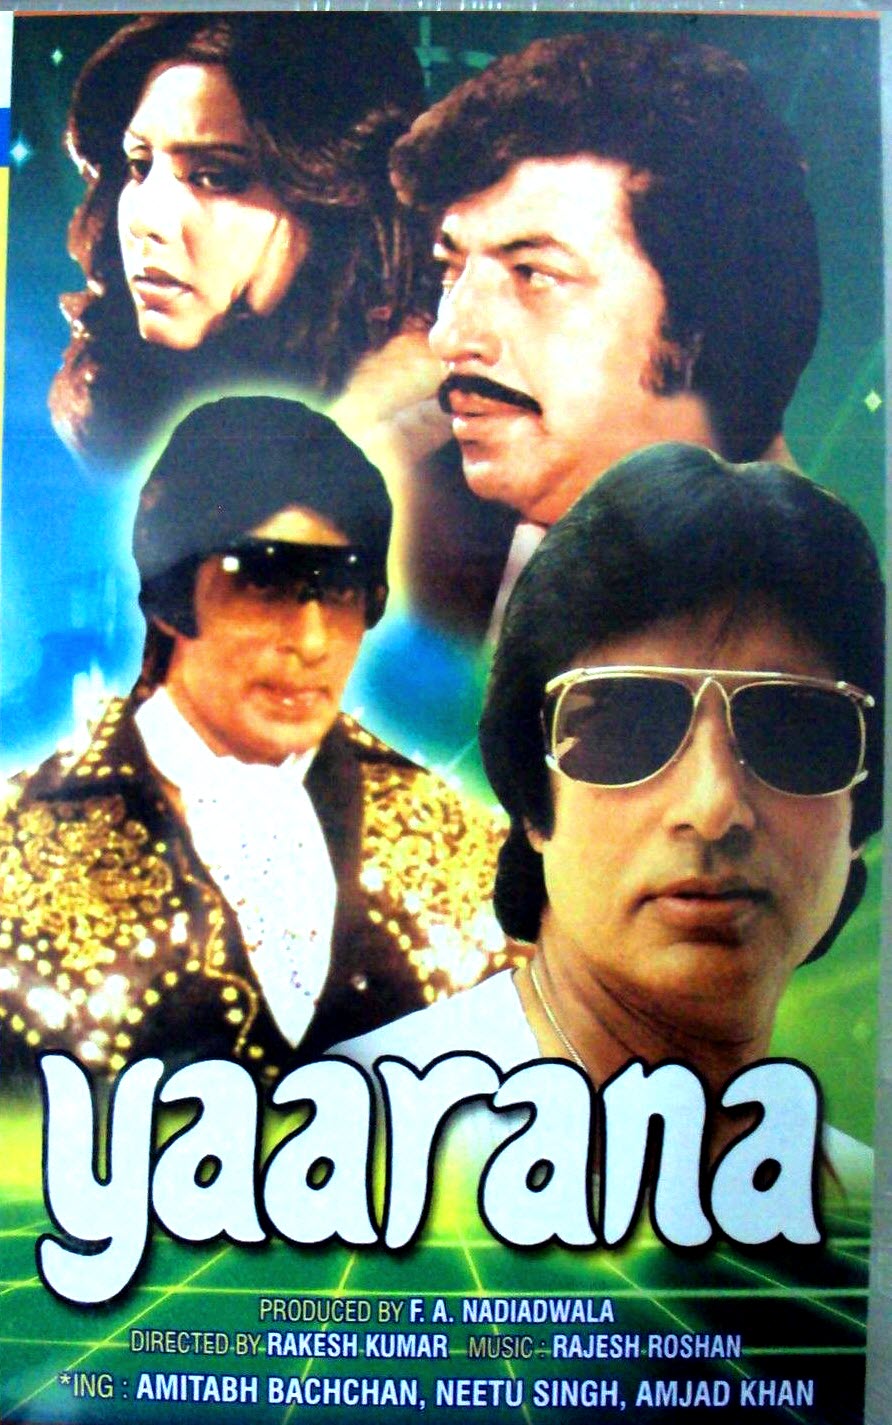  فیلم سینمایی Yaarana با حضور آمیتاب باچان، Neetu Singh و Amjad Khan